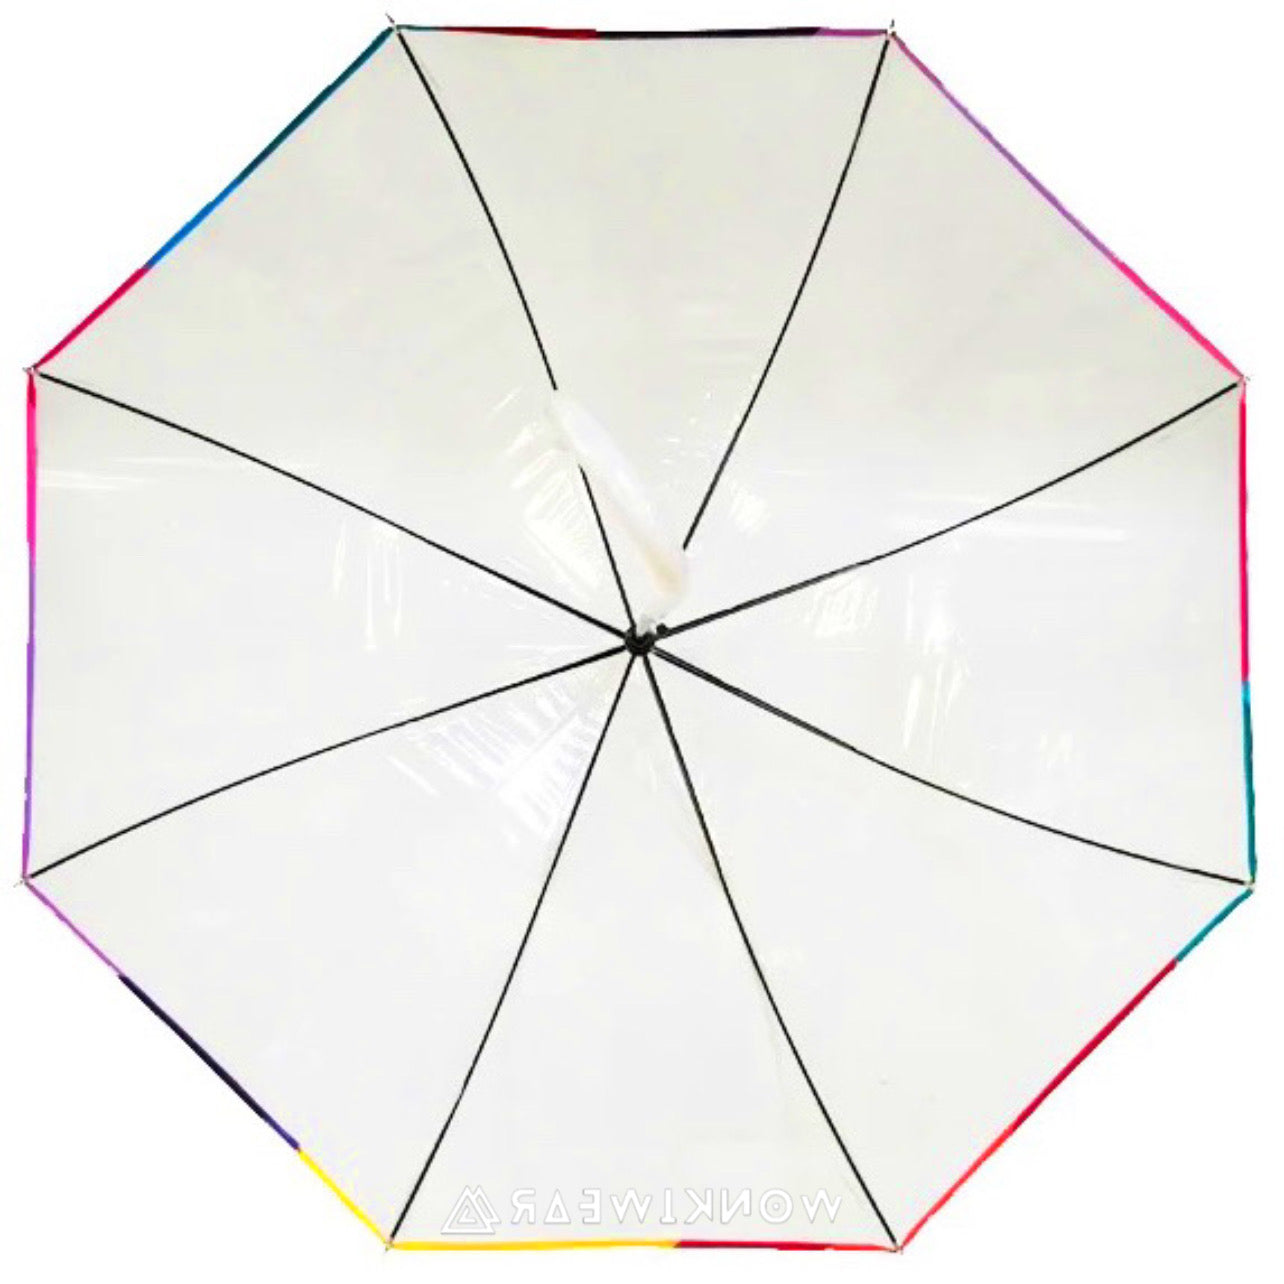 Large Automatic Dome Umbrella - Transparent with Rainbow Seams